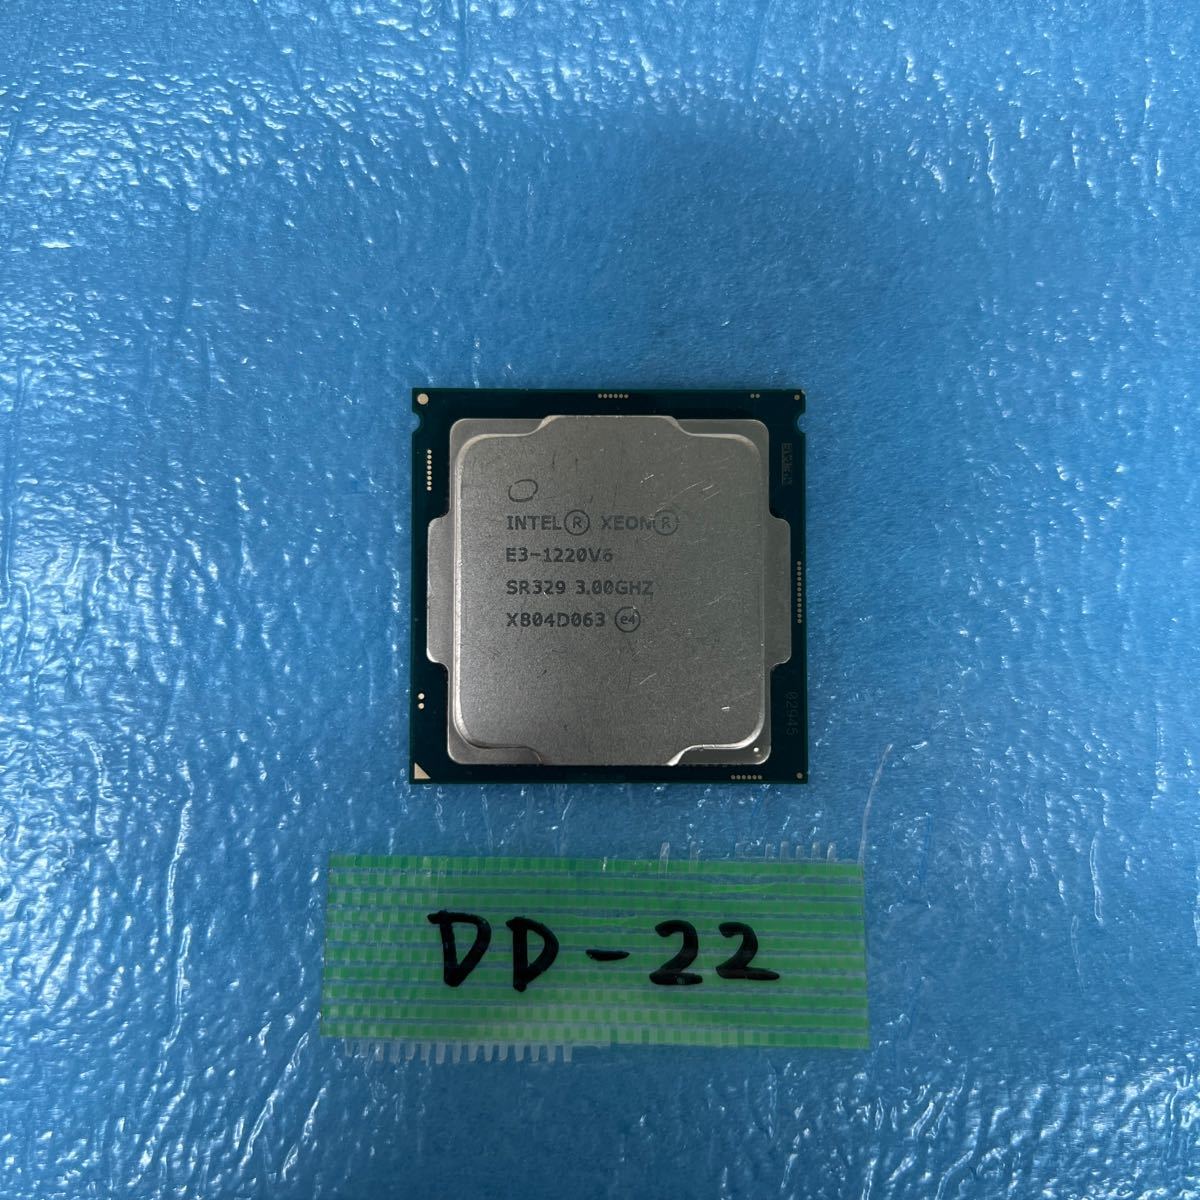 DD-22 激安 CPU Intel XEON E3-1220V6 3.00GHz SR329 動作品 同梱可能_画像1